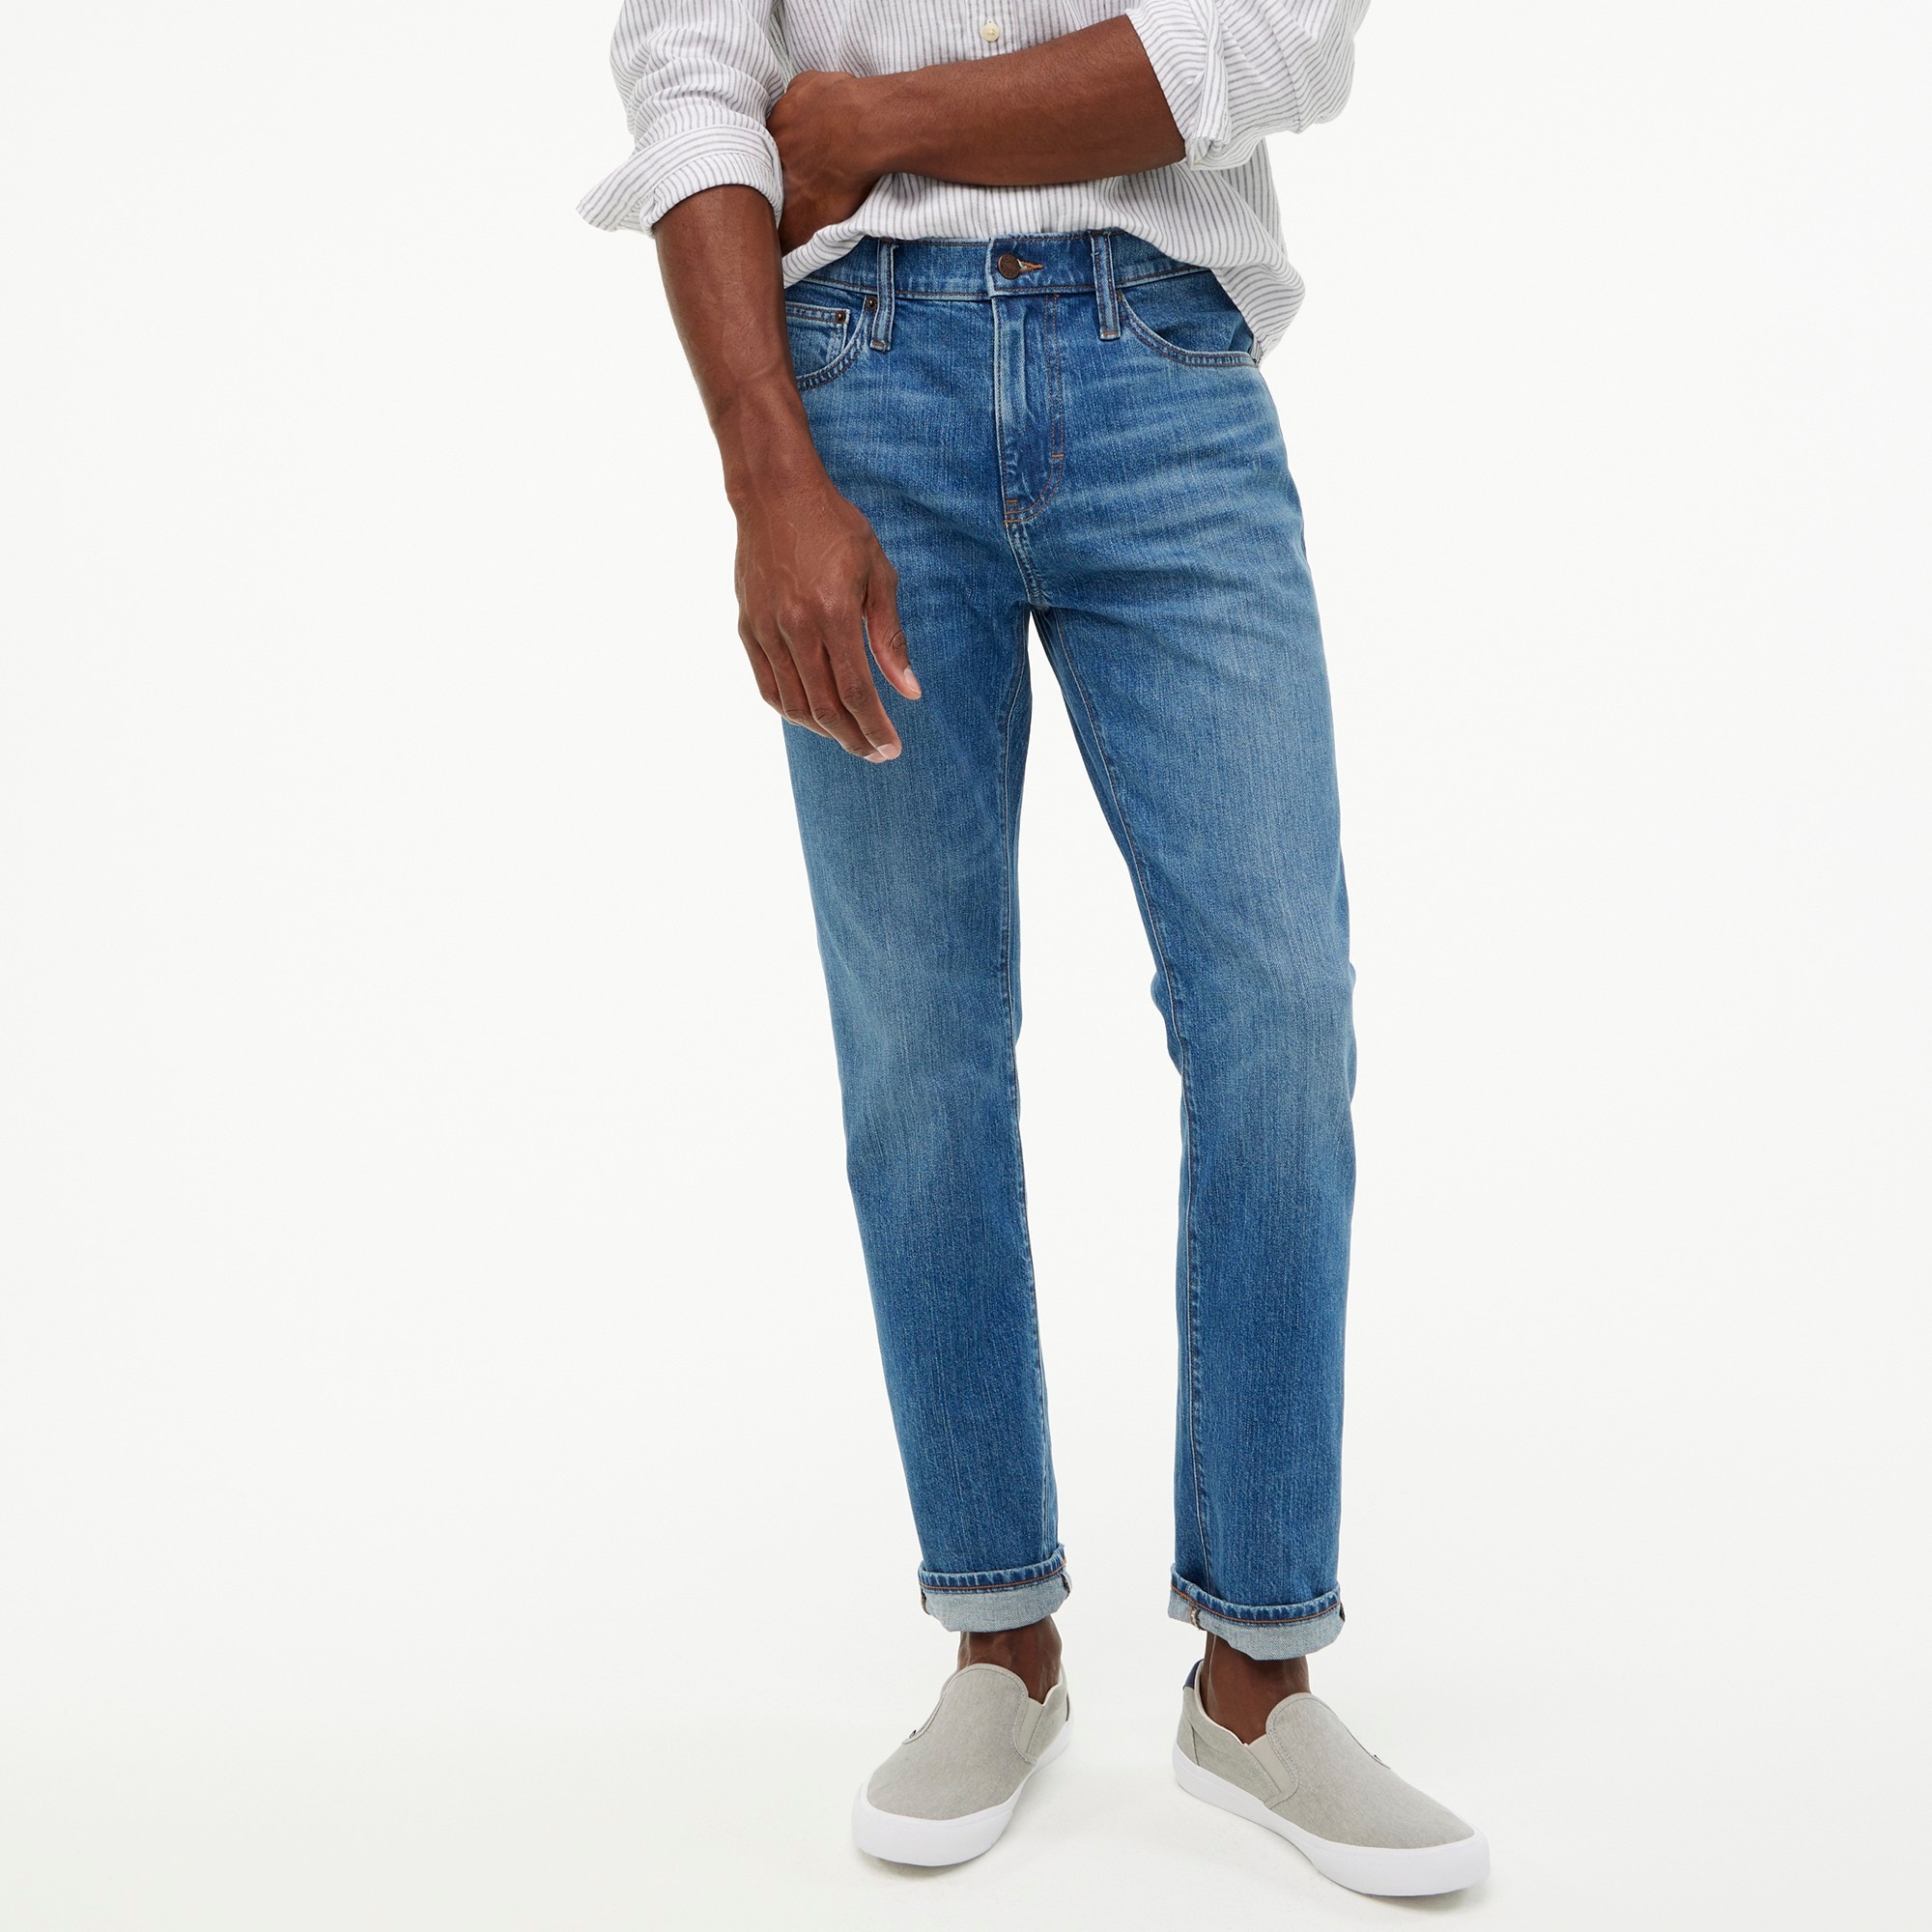 Jcrew Slim-fit jean in vintage flex